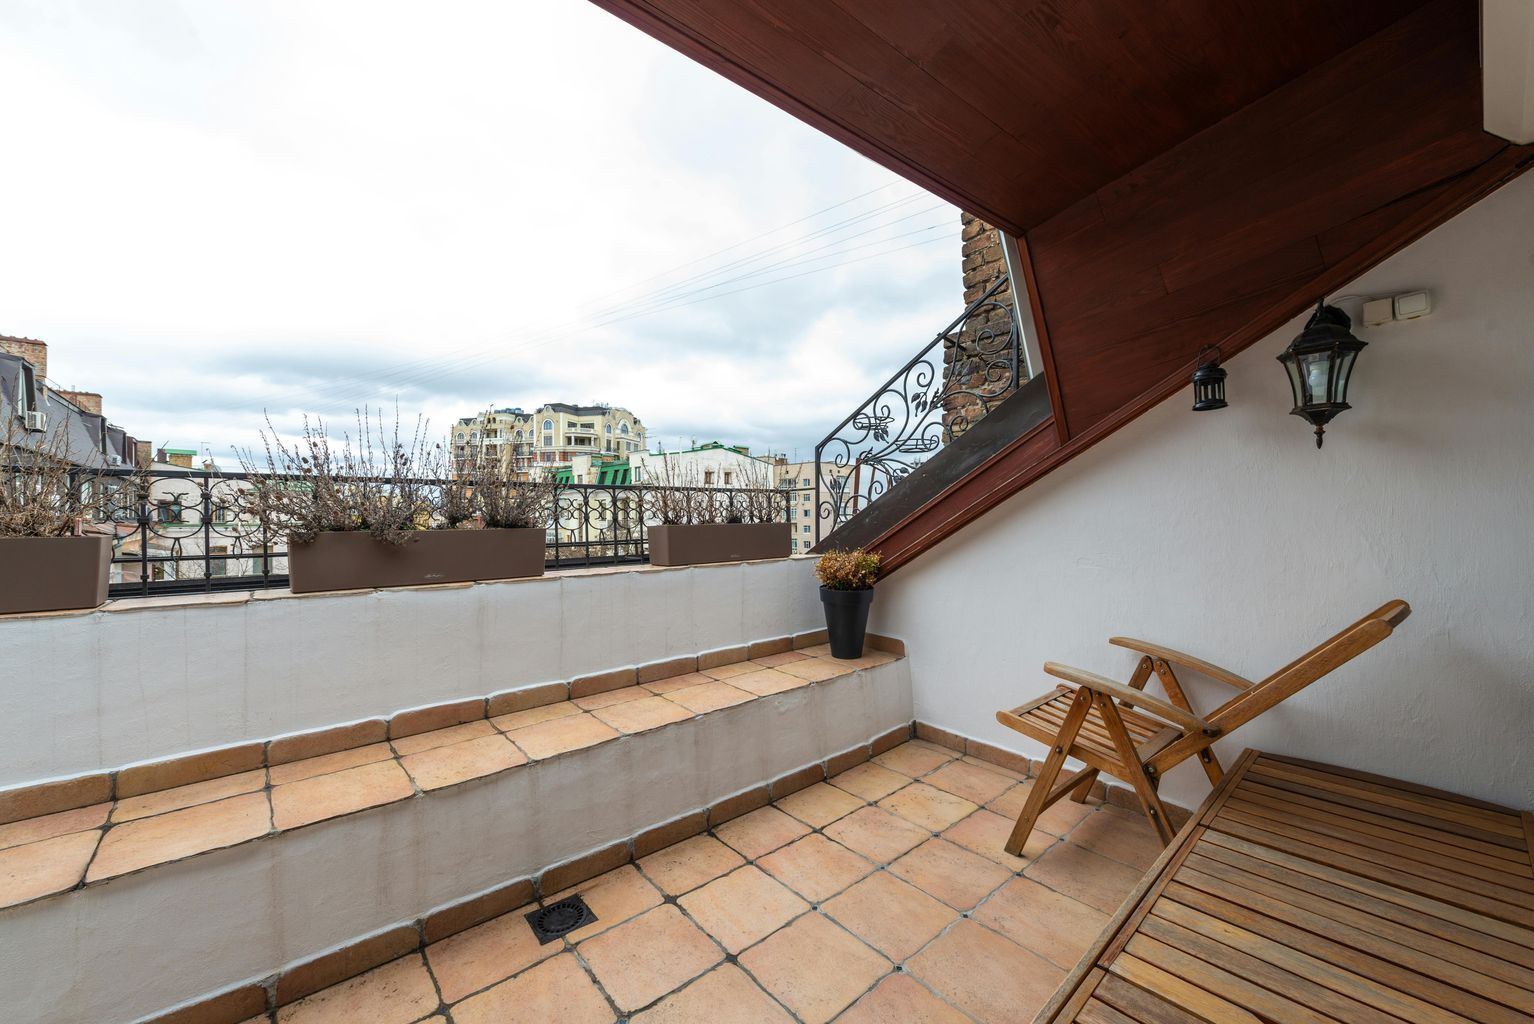 Terrace with armchair on tiled floor in city